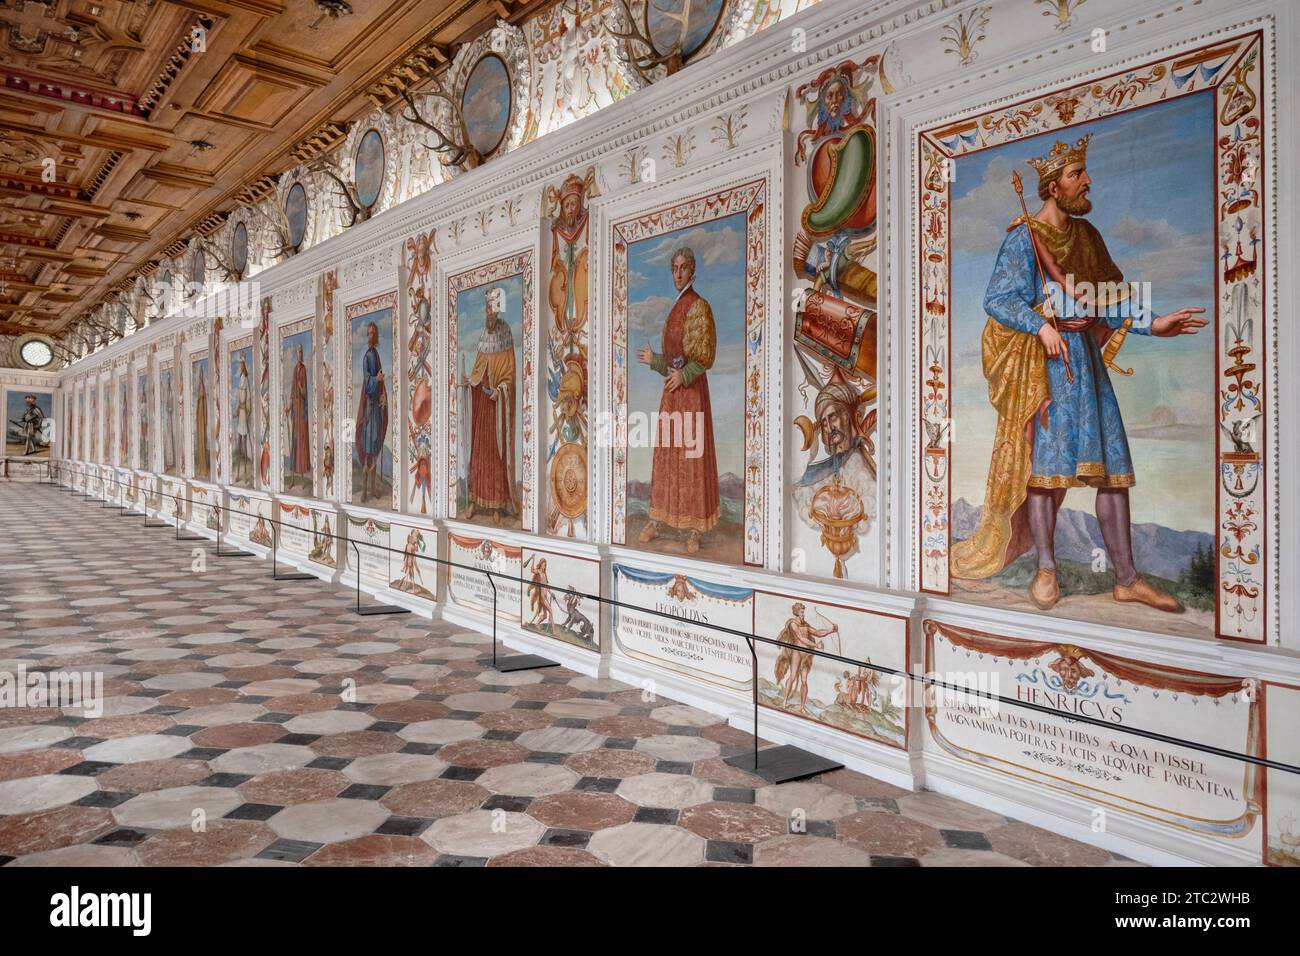 Österreich, Innsbruck, Schloss Ambras, ein Renaissanceschloss aus dem 16. Jahrhundert, der Spanische Saal ist mit 27 abendfüllenden Porträts der Herrscher von Tirol geschmückt. Stockfoto